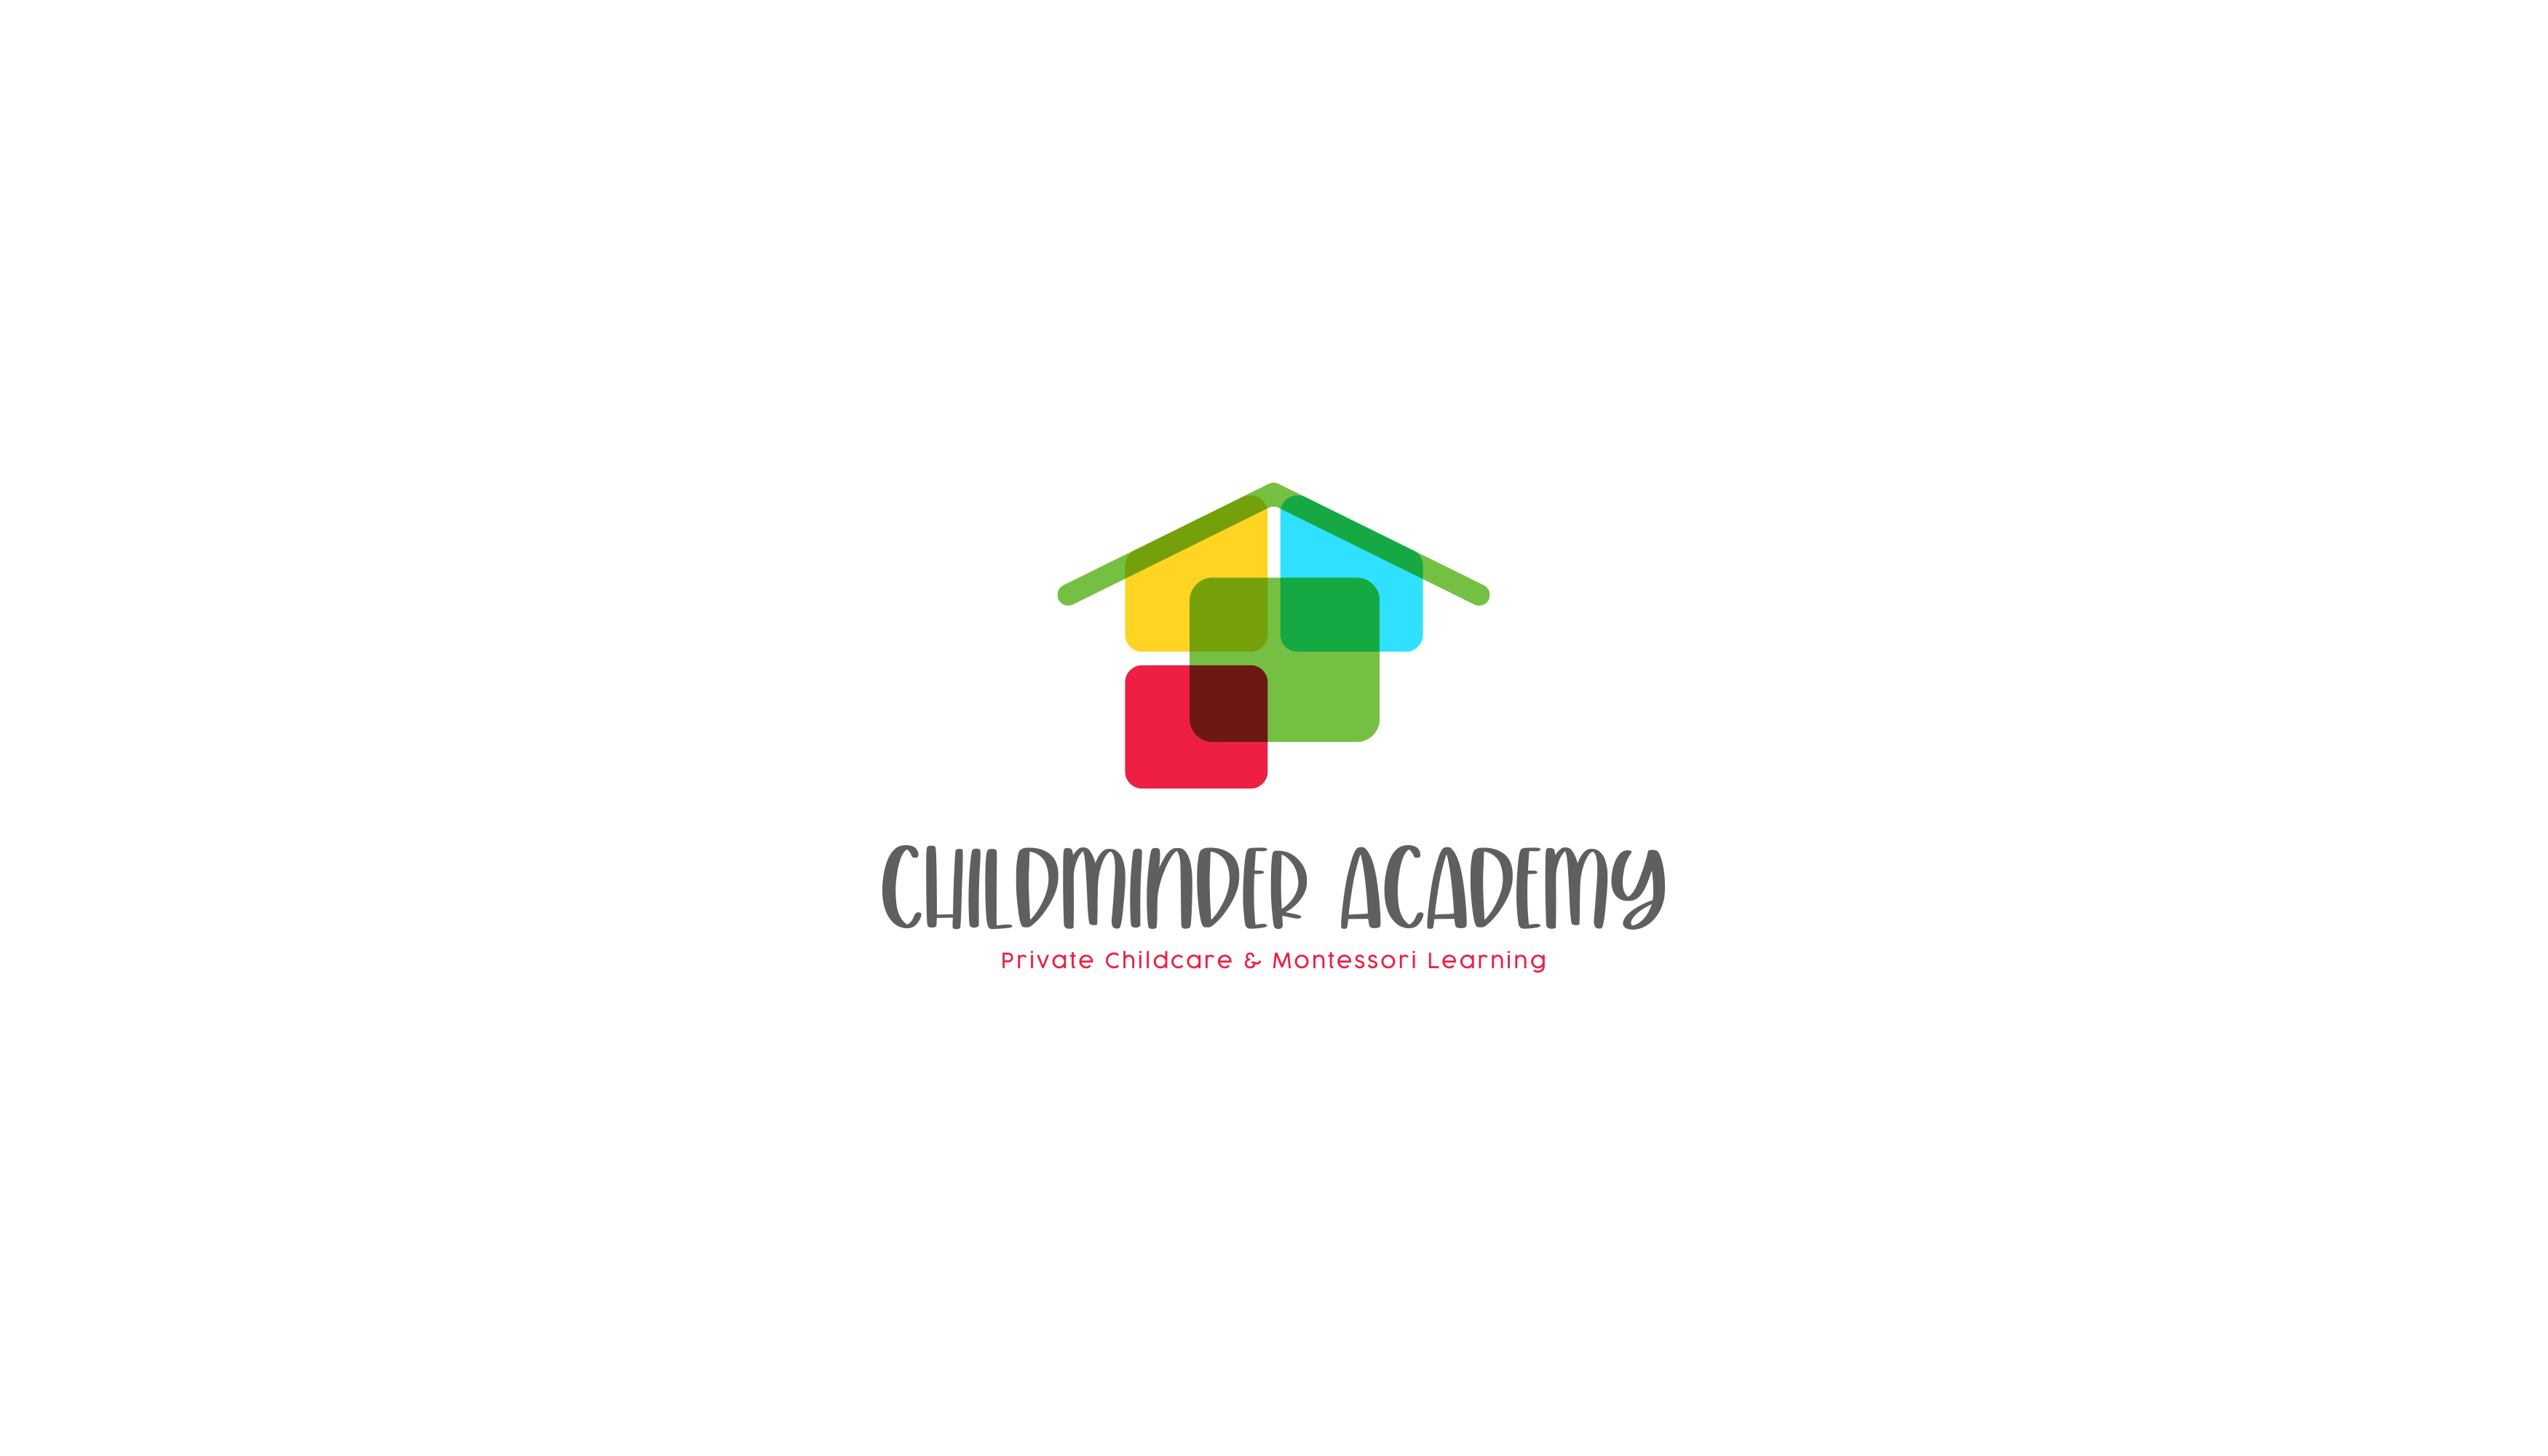 ChildMinder Academy Design #2